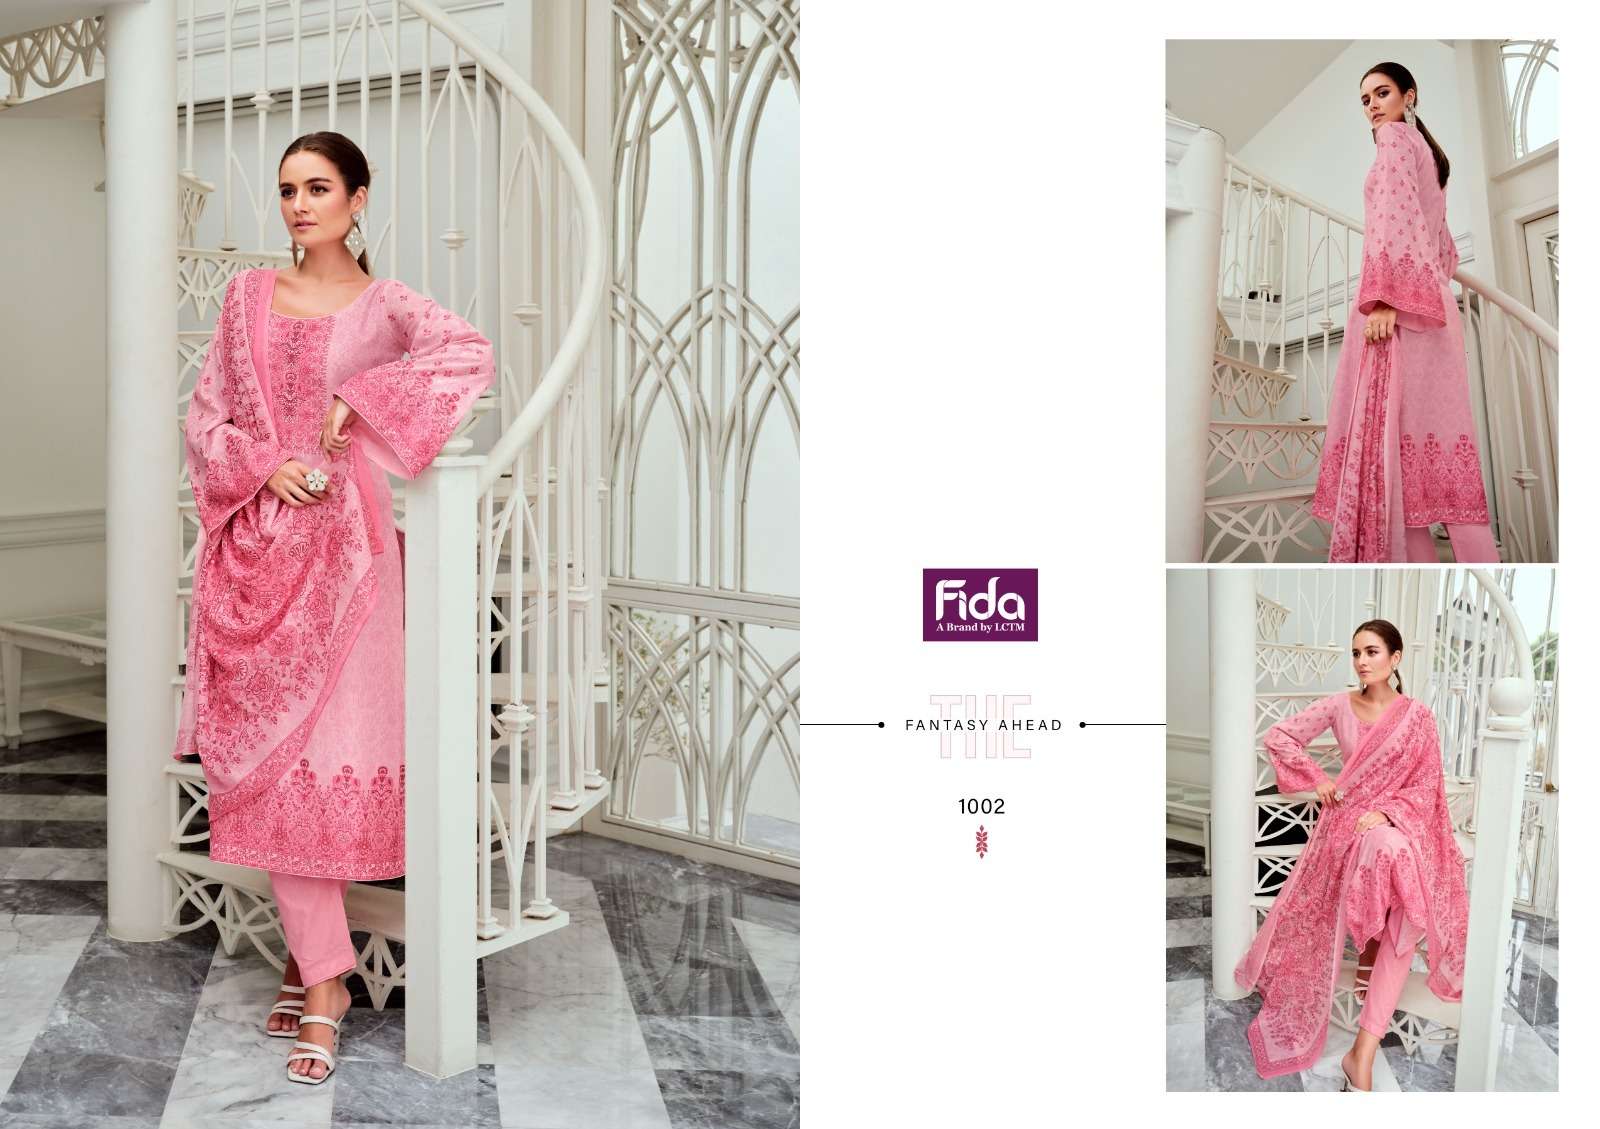 fida posheeda 1001-1006 series karachi cotton designer salwar kameez online dealer surat 